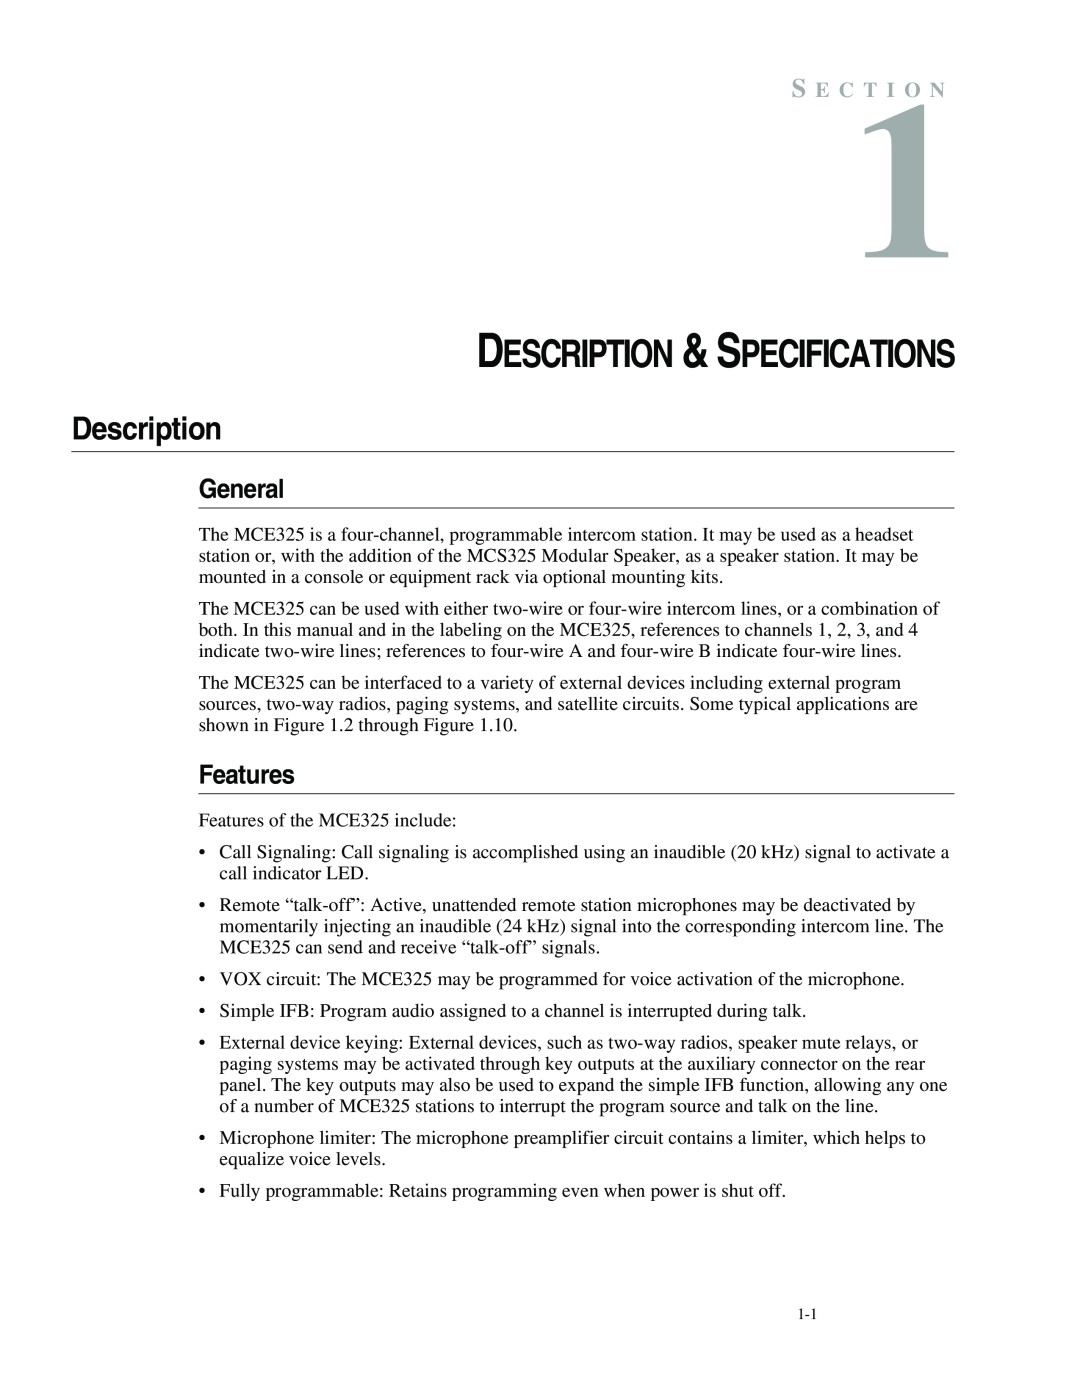 Telex MCE325 manual Description & Specifications, General, Features, S E C T I O N 